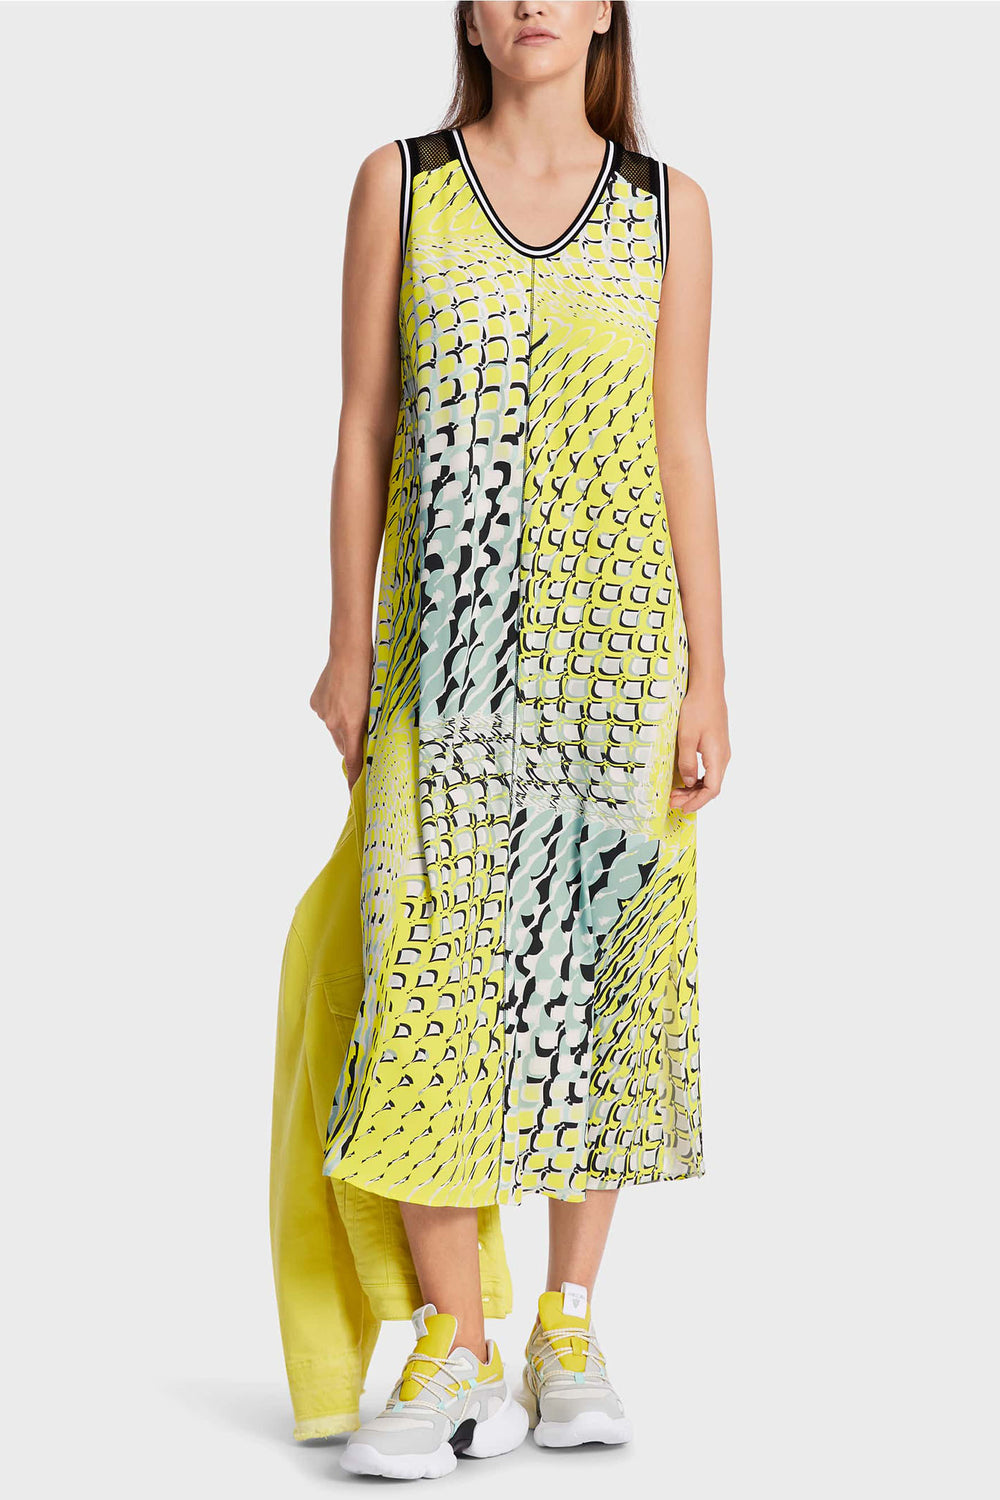 Marc Cain Sports WS 21.16 W30 509 Soft Sage Print Sleeveless Dress - Olivia Grace Fashion